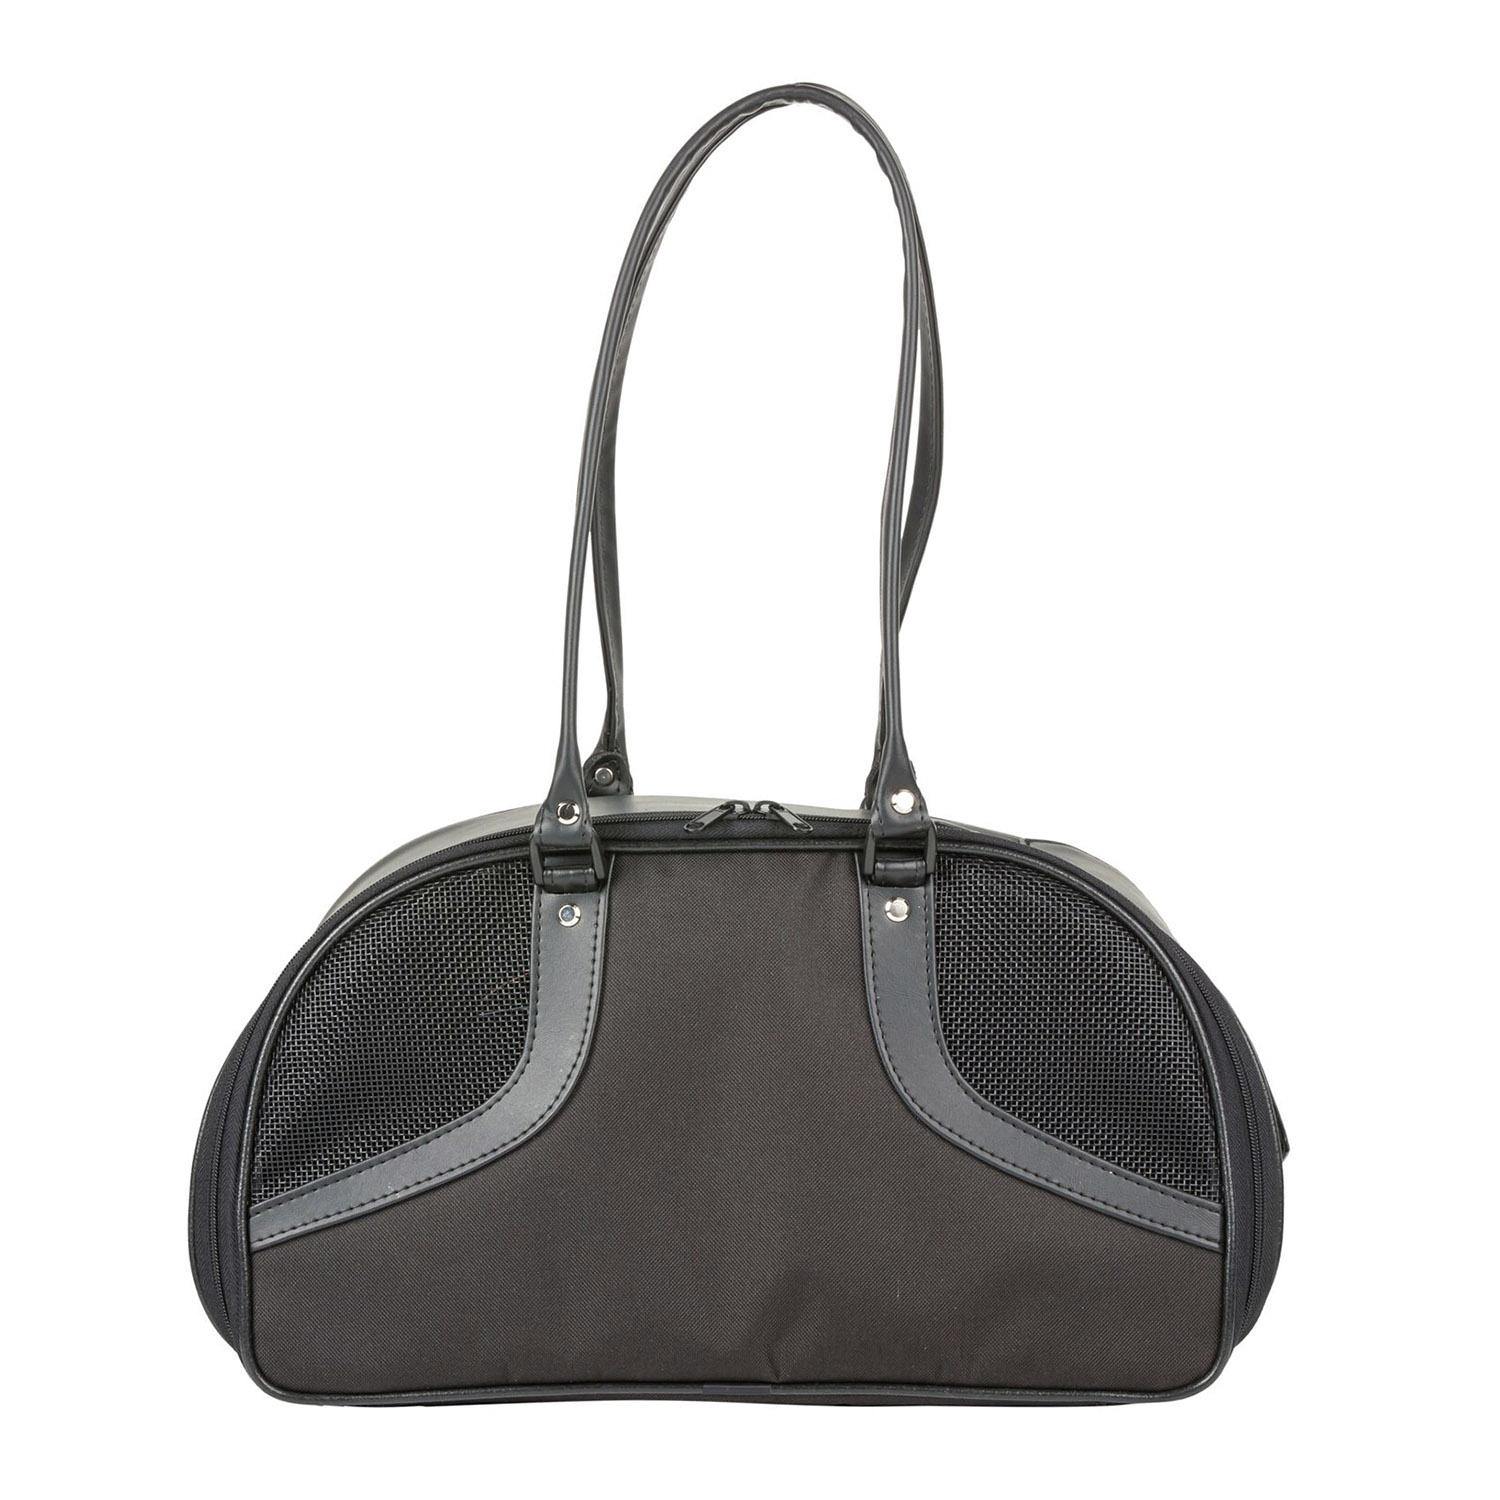 Petote Roxy Dog Carrier Handbag - Black